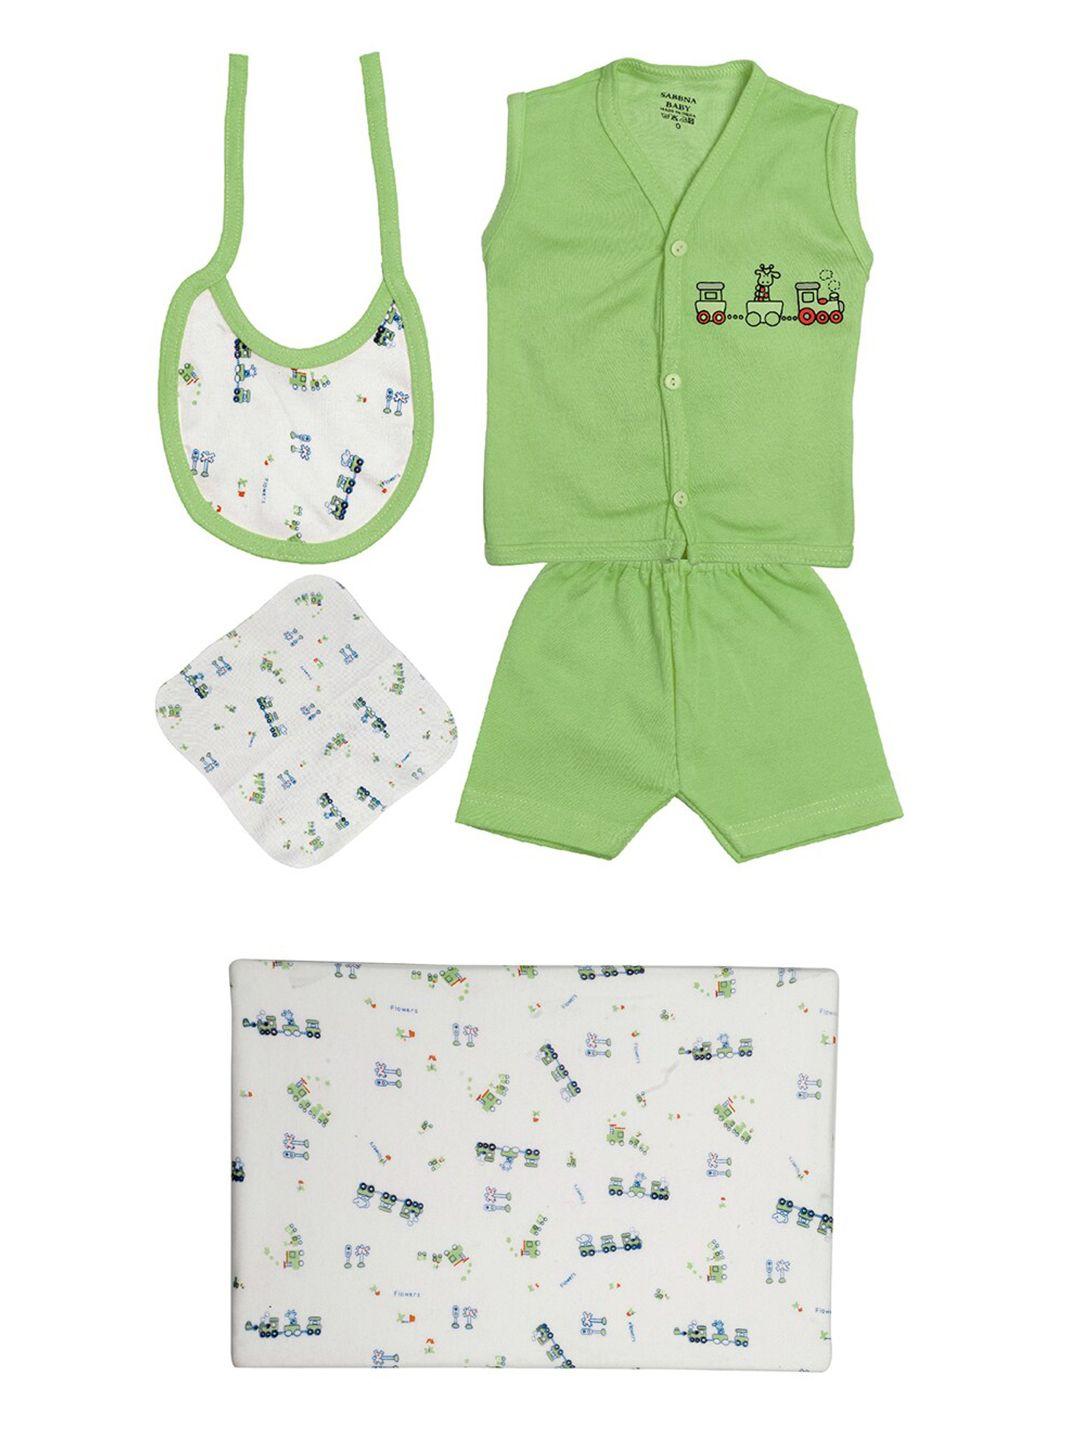 tiny-hug-boys-green-&-white-printed-clothing-set